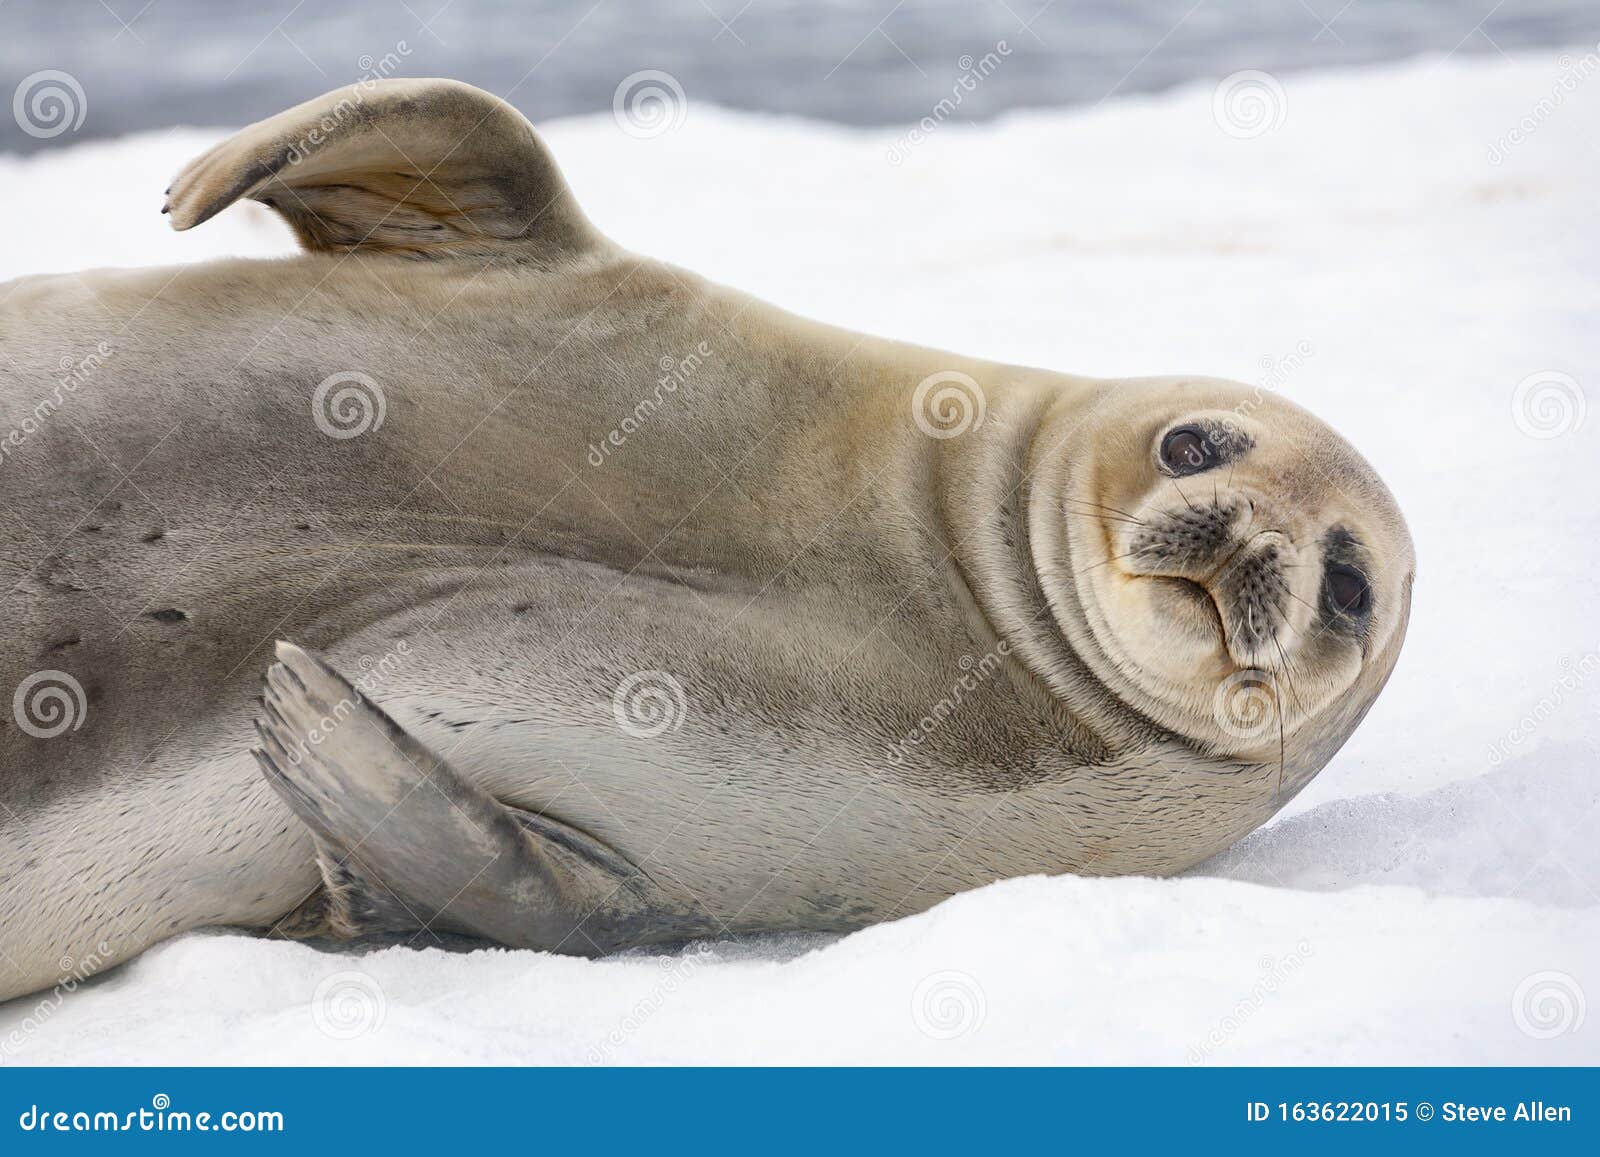 antarctic fur seal - south shetland islands - antarctica